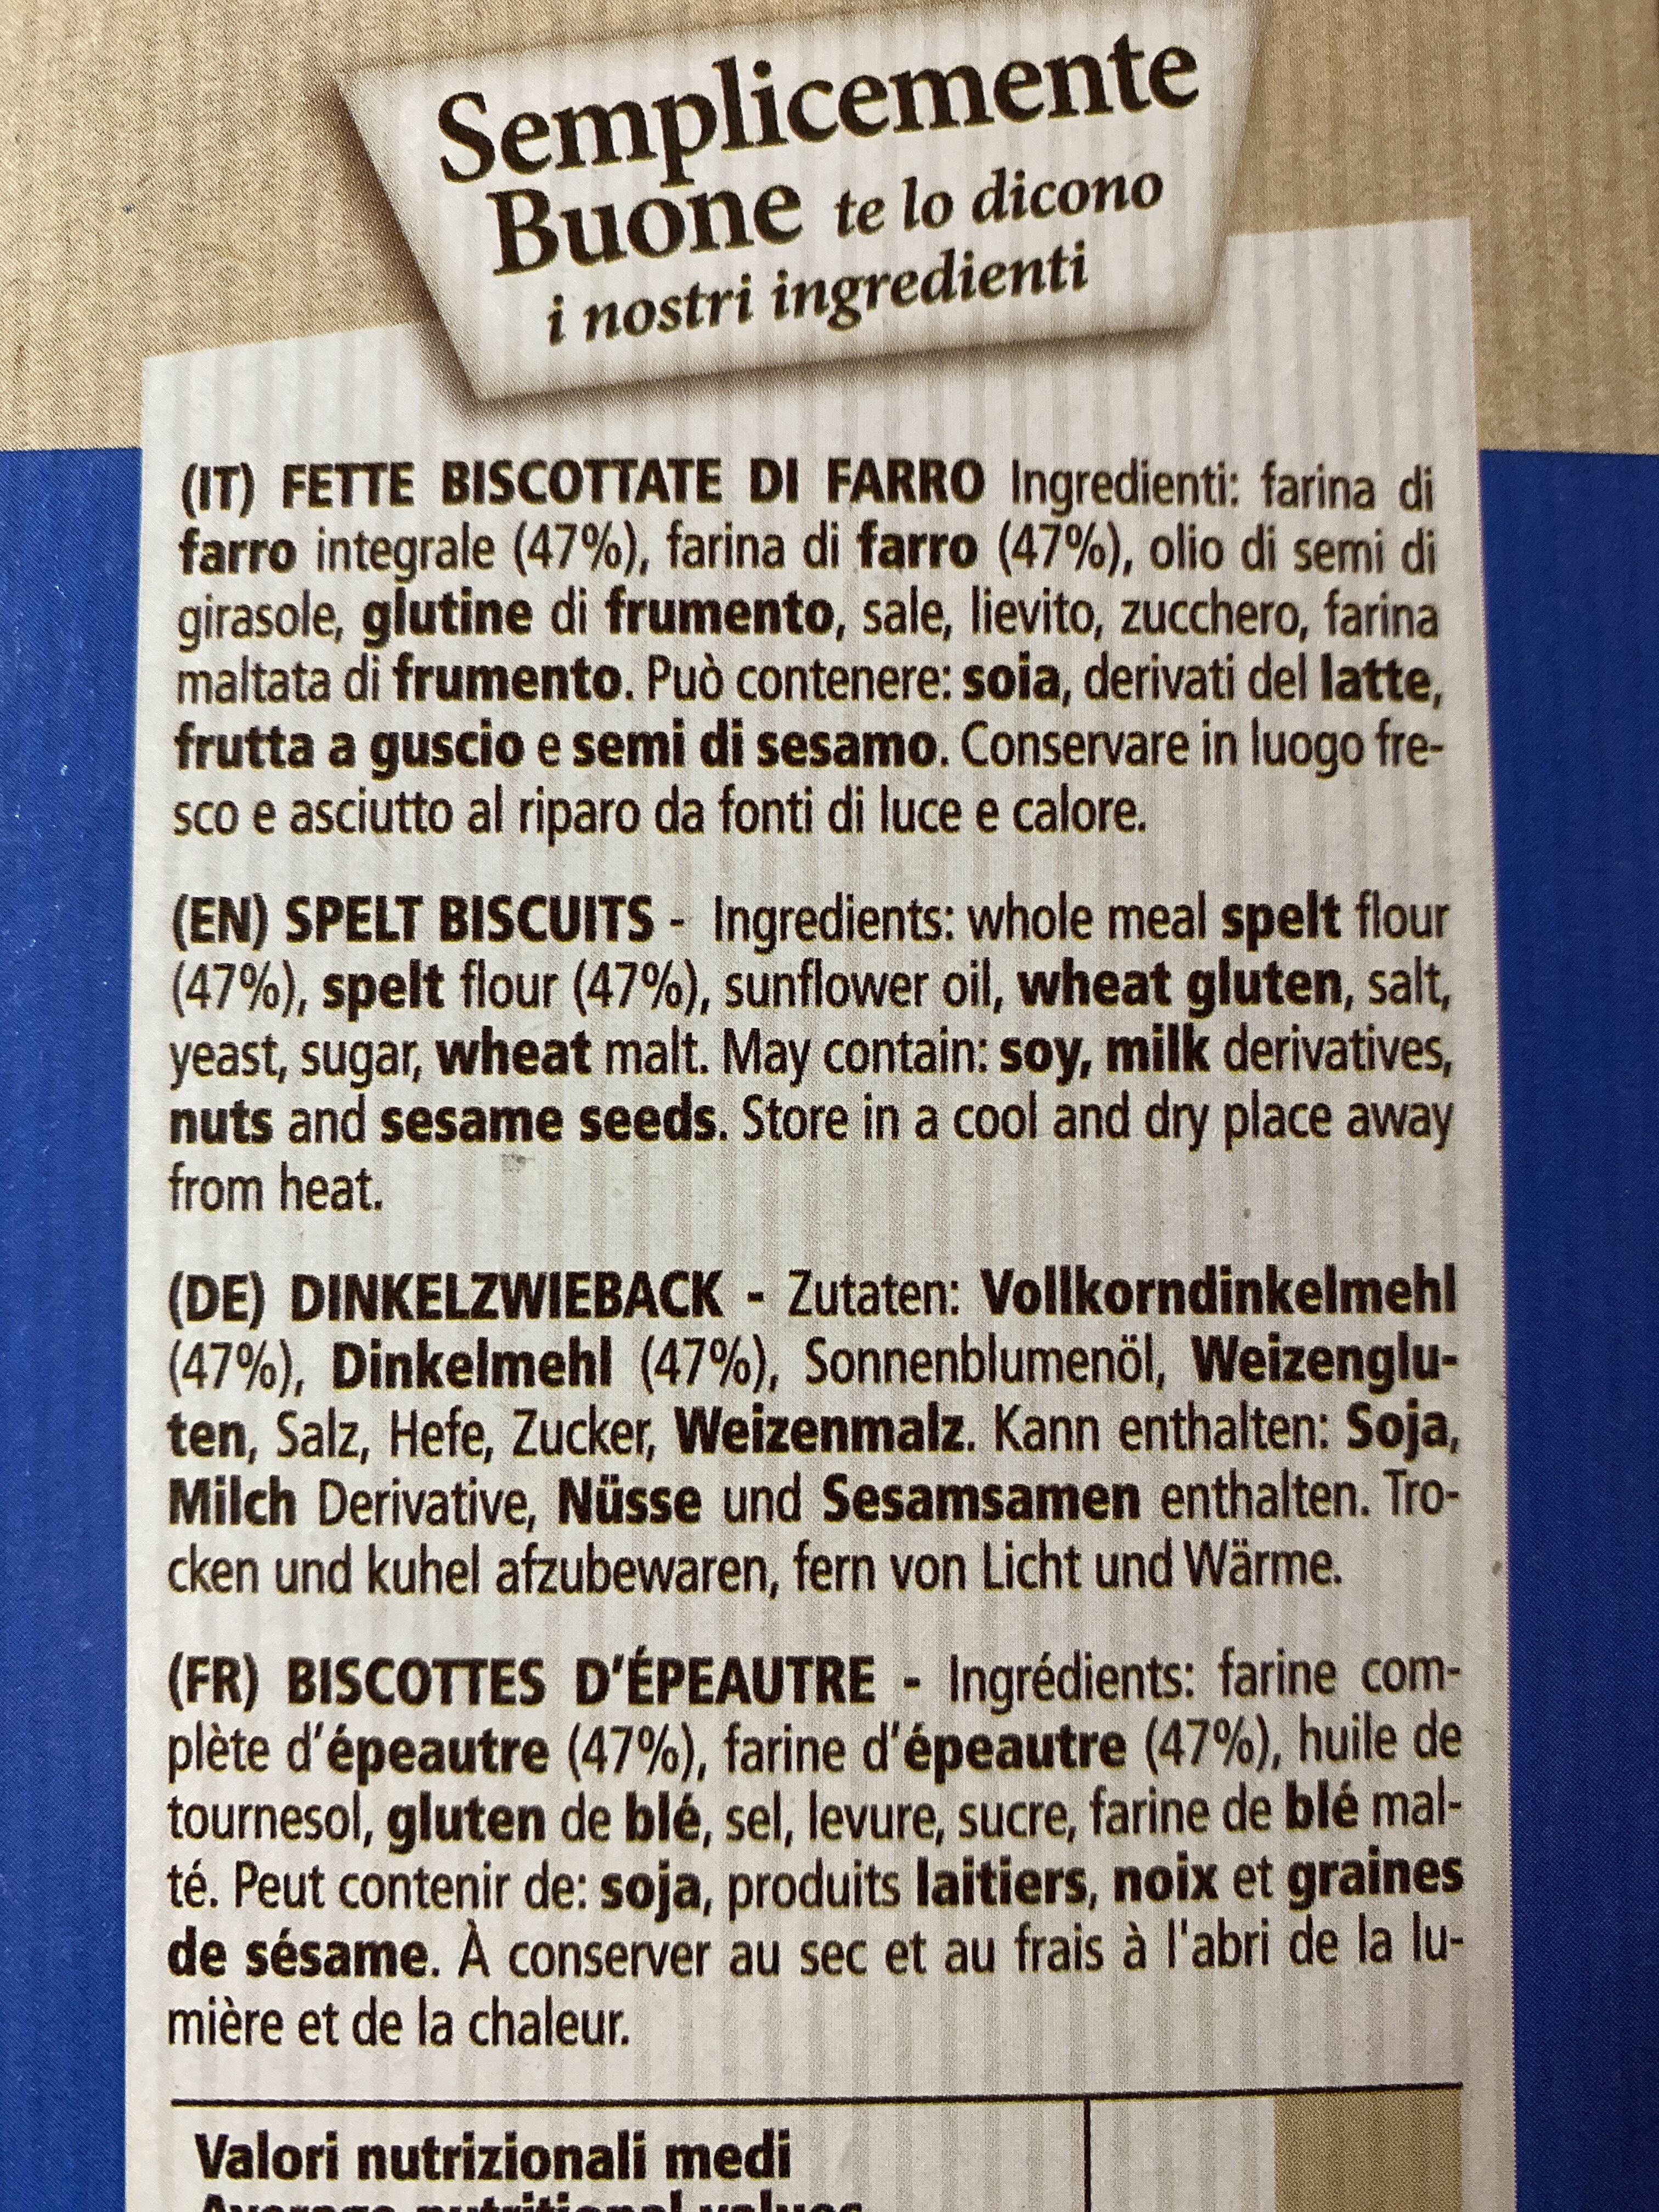 Fette biscottate - farina integrale di farro - Ingredients - it